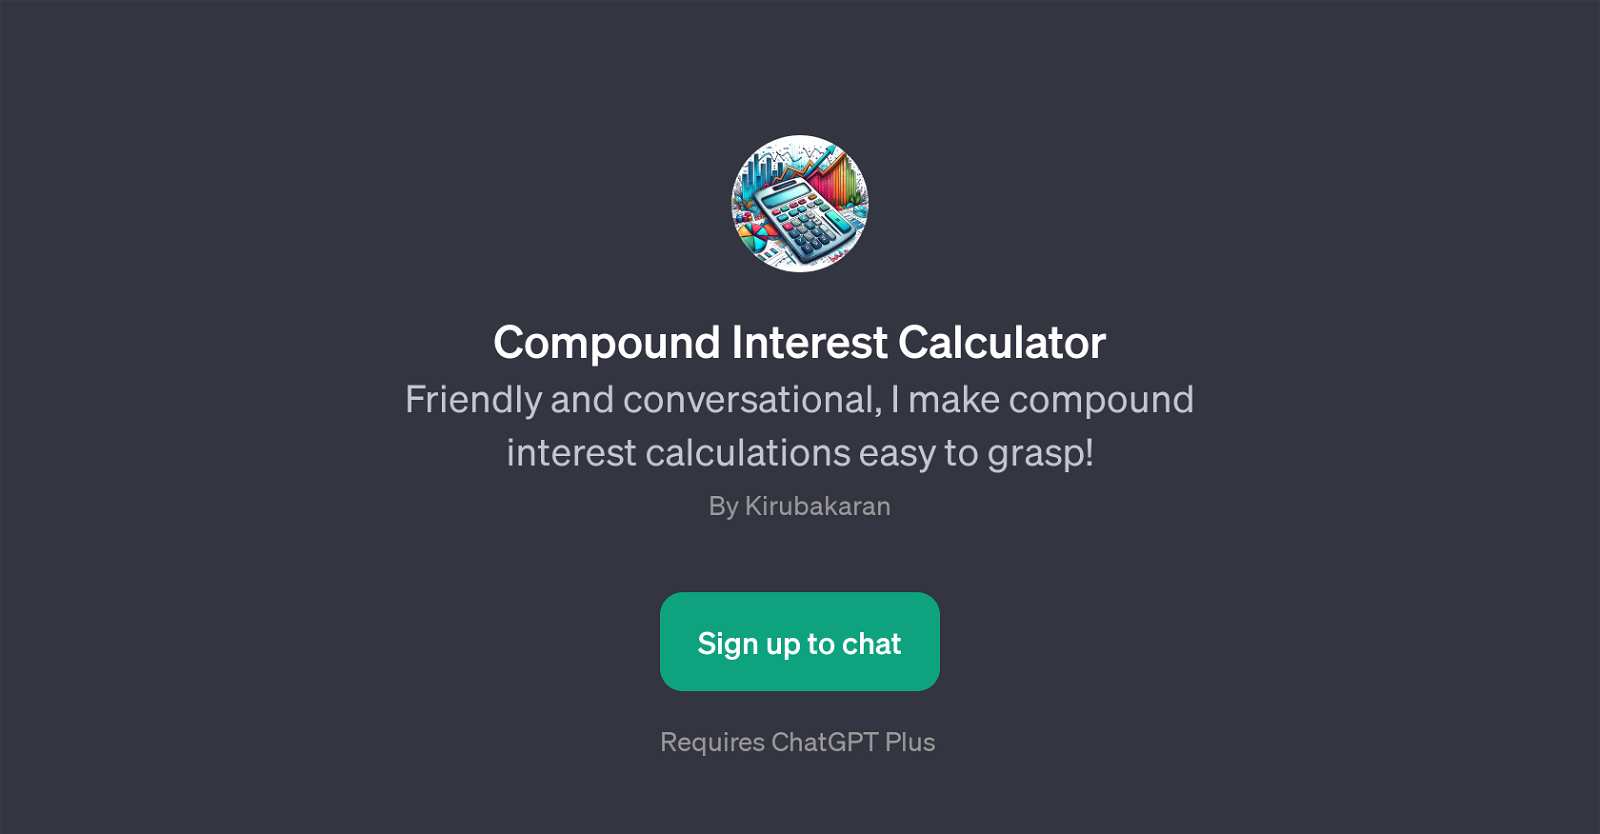 Compound Interest Calculator website